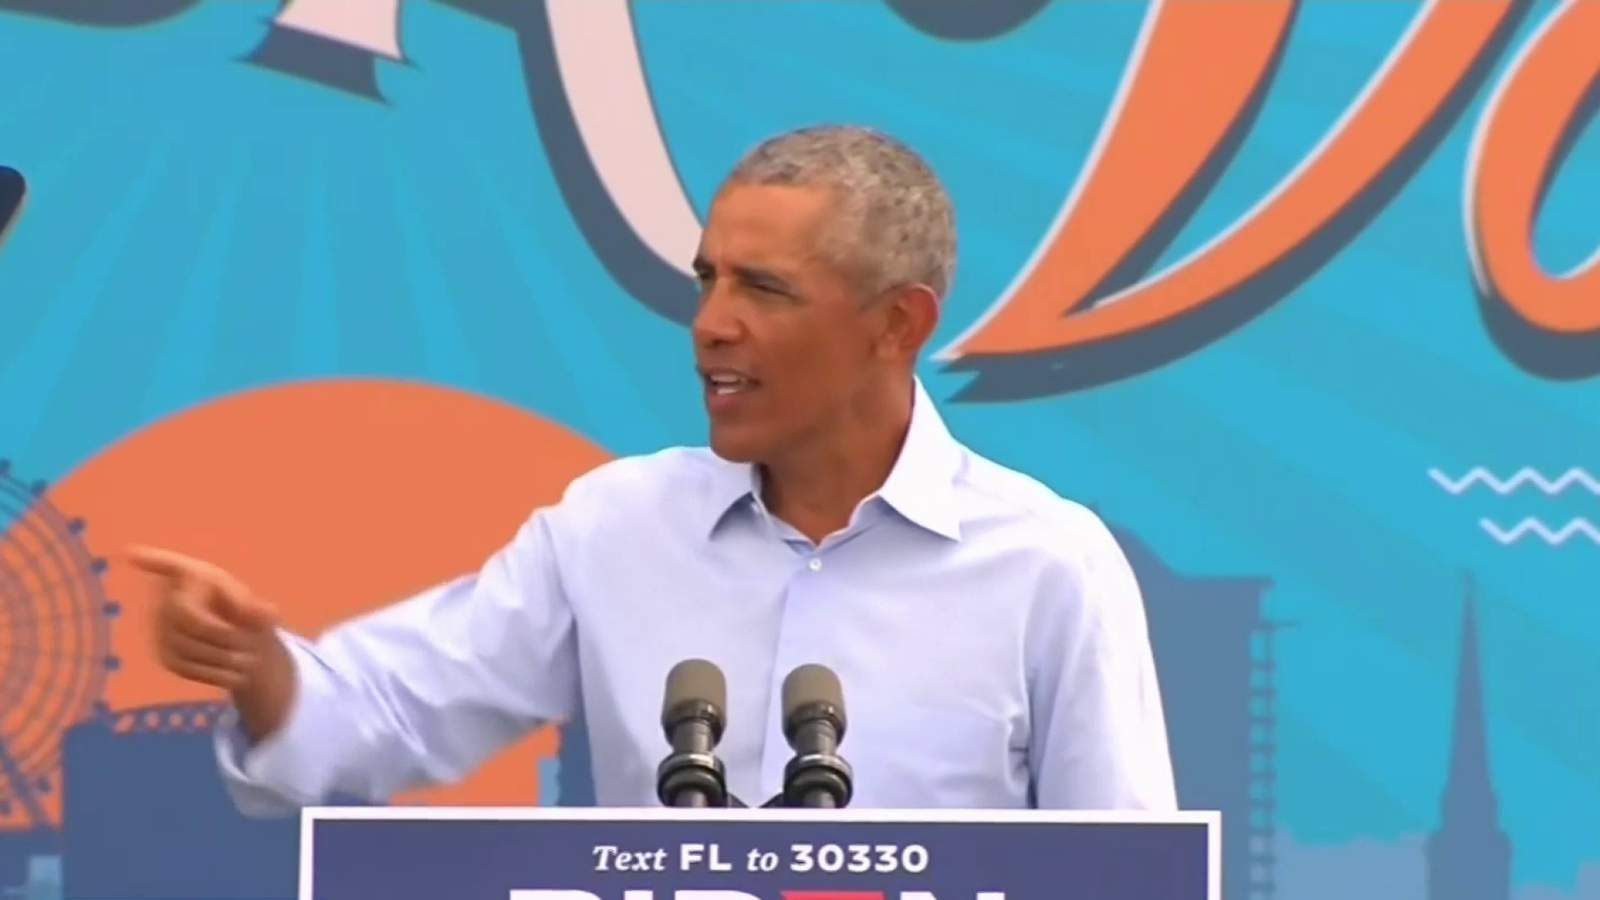 ‘We’ve got to vote like never before:’ Former president Obama rallies Orlando voters for Joe Biden